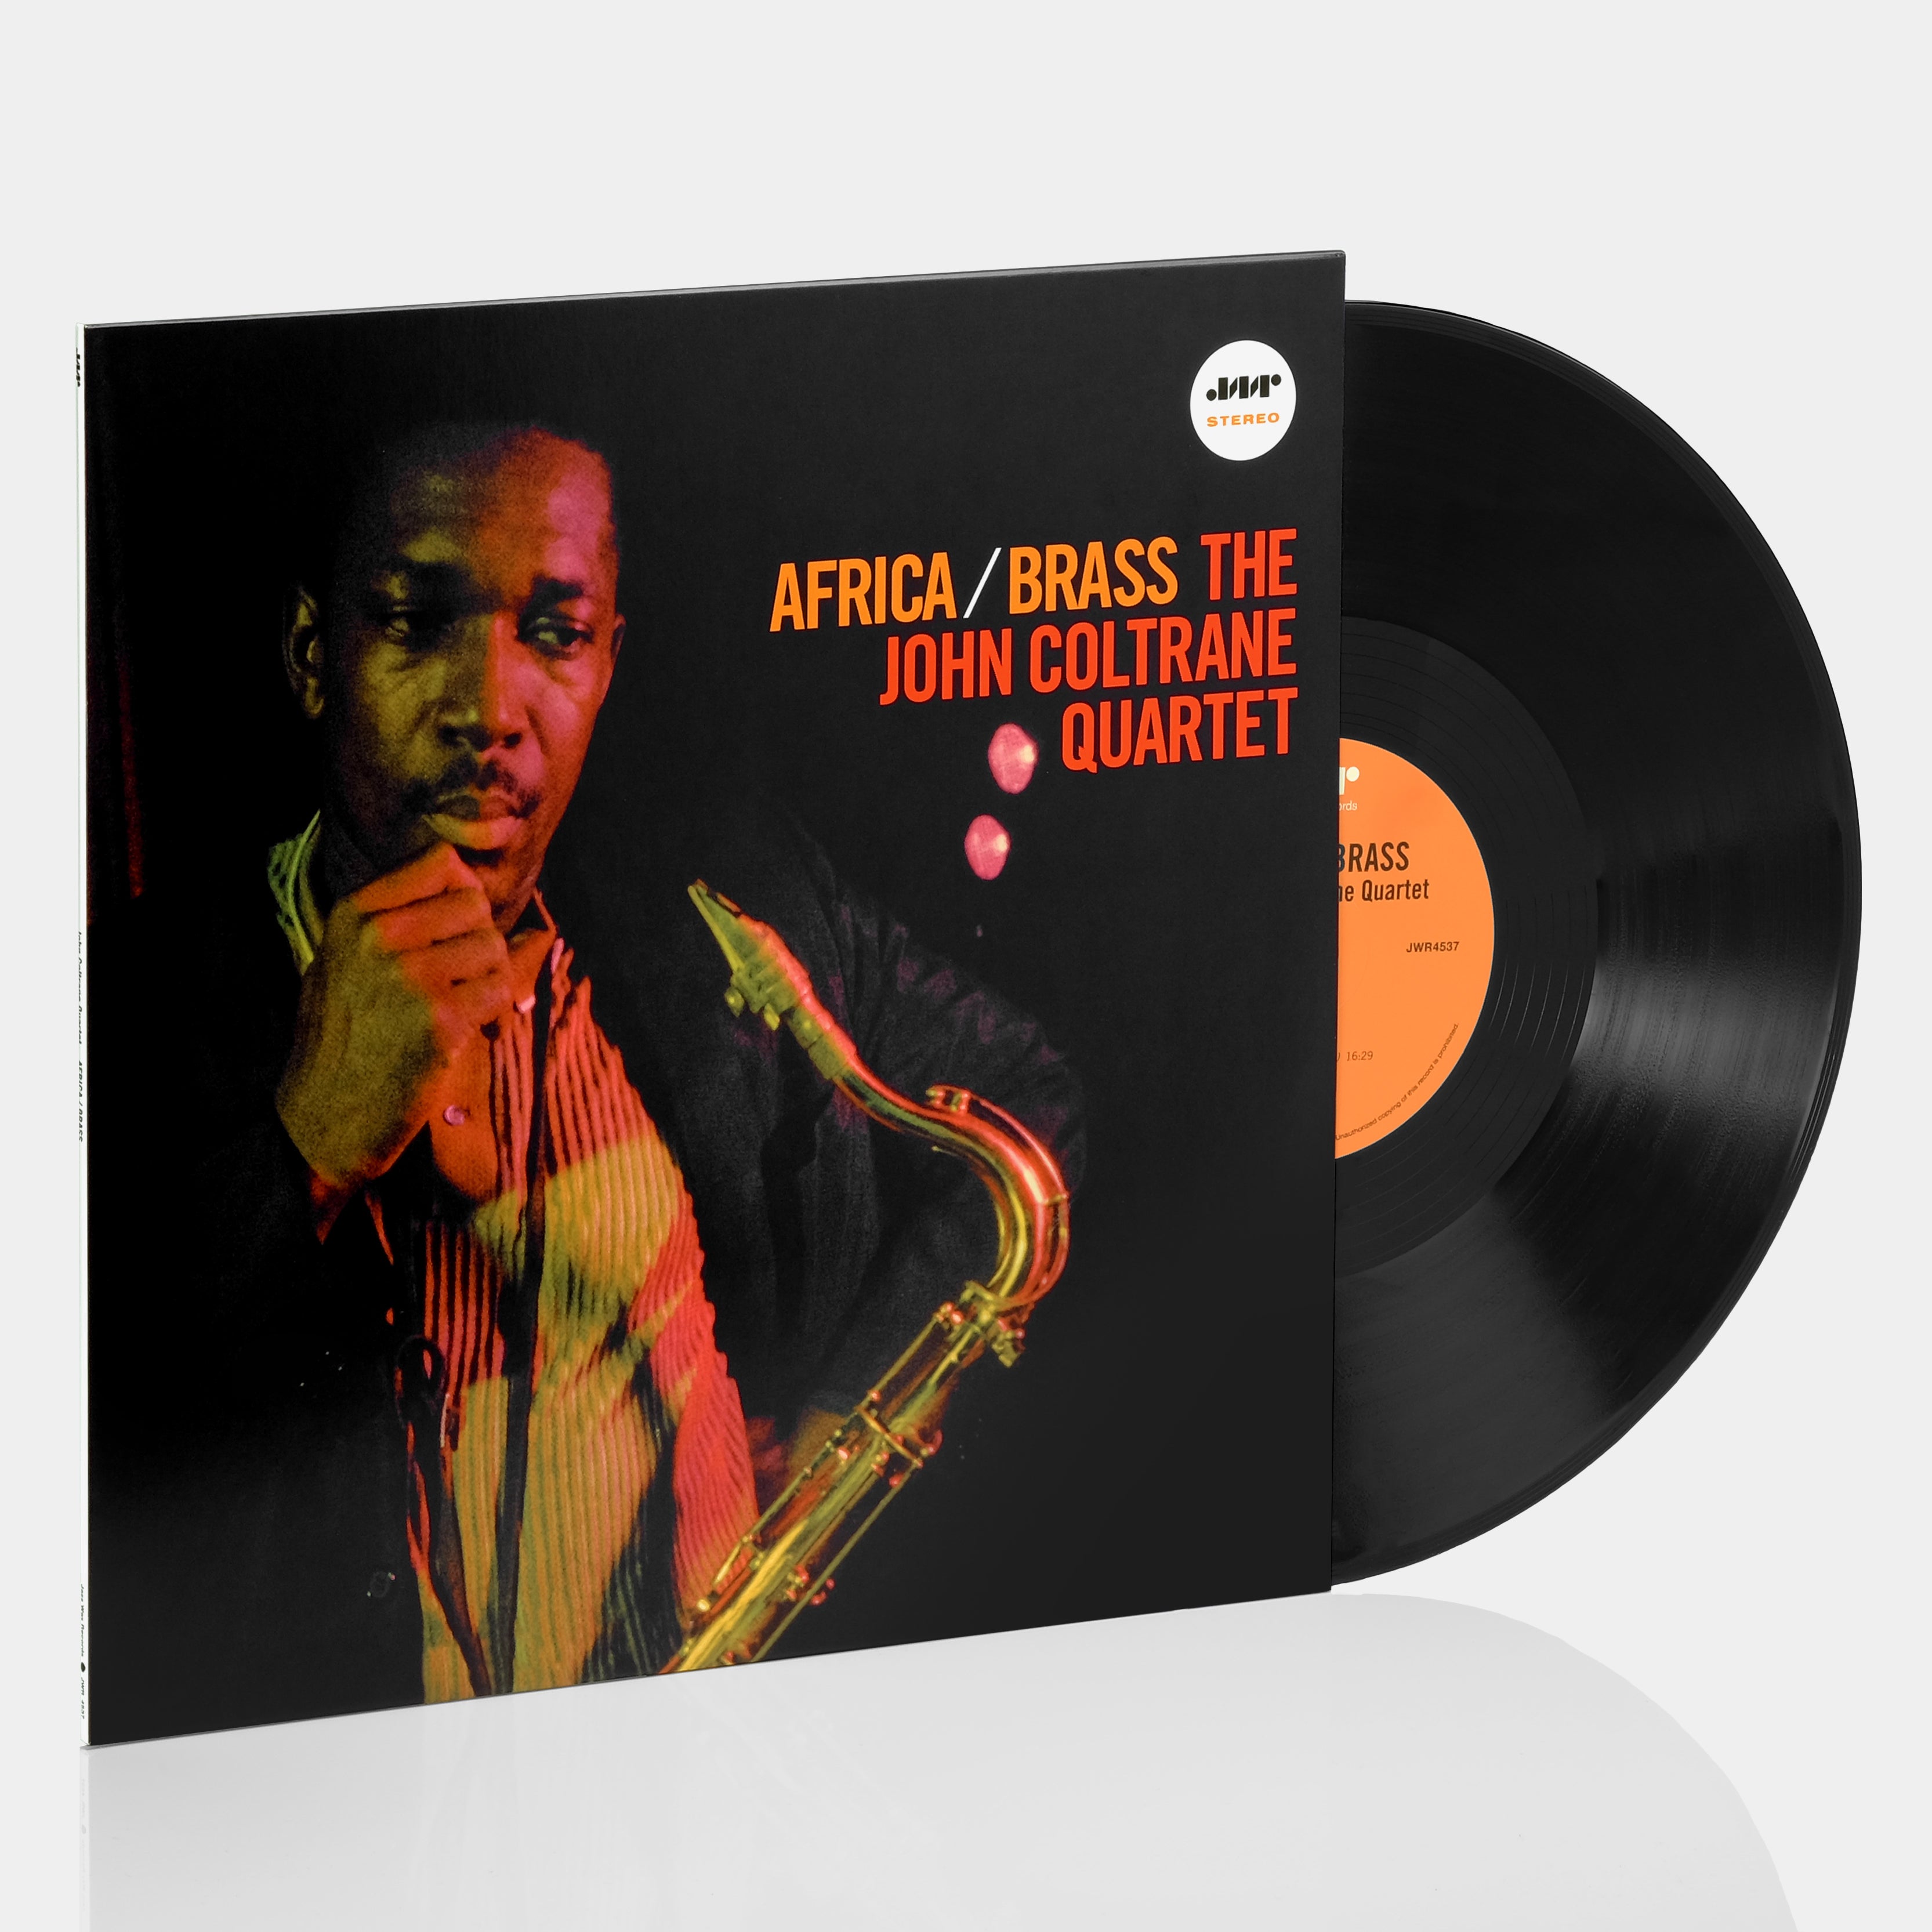 The John Coltrane Quartet - Africa/Brass LP Vinyl Record